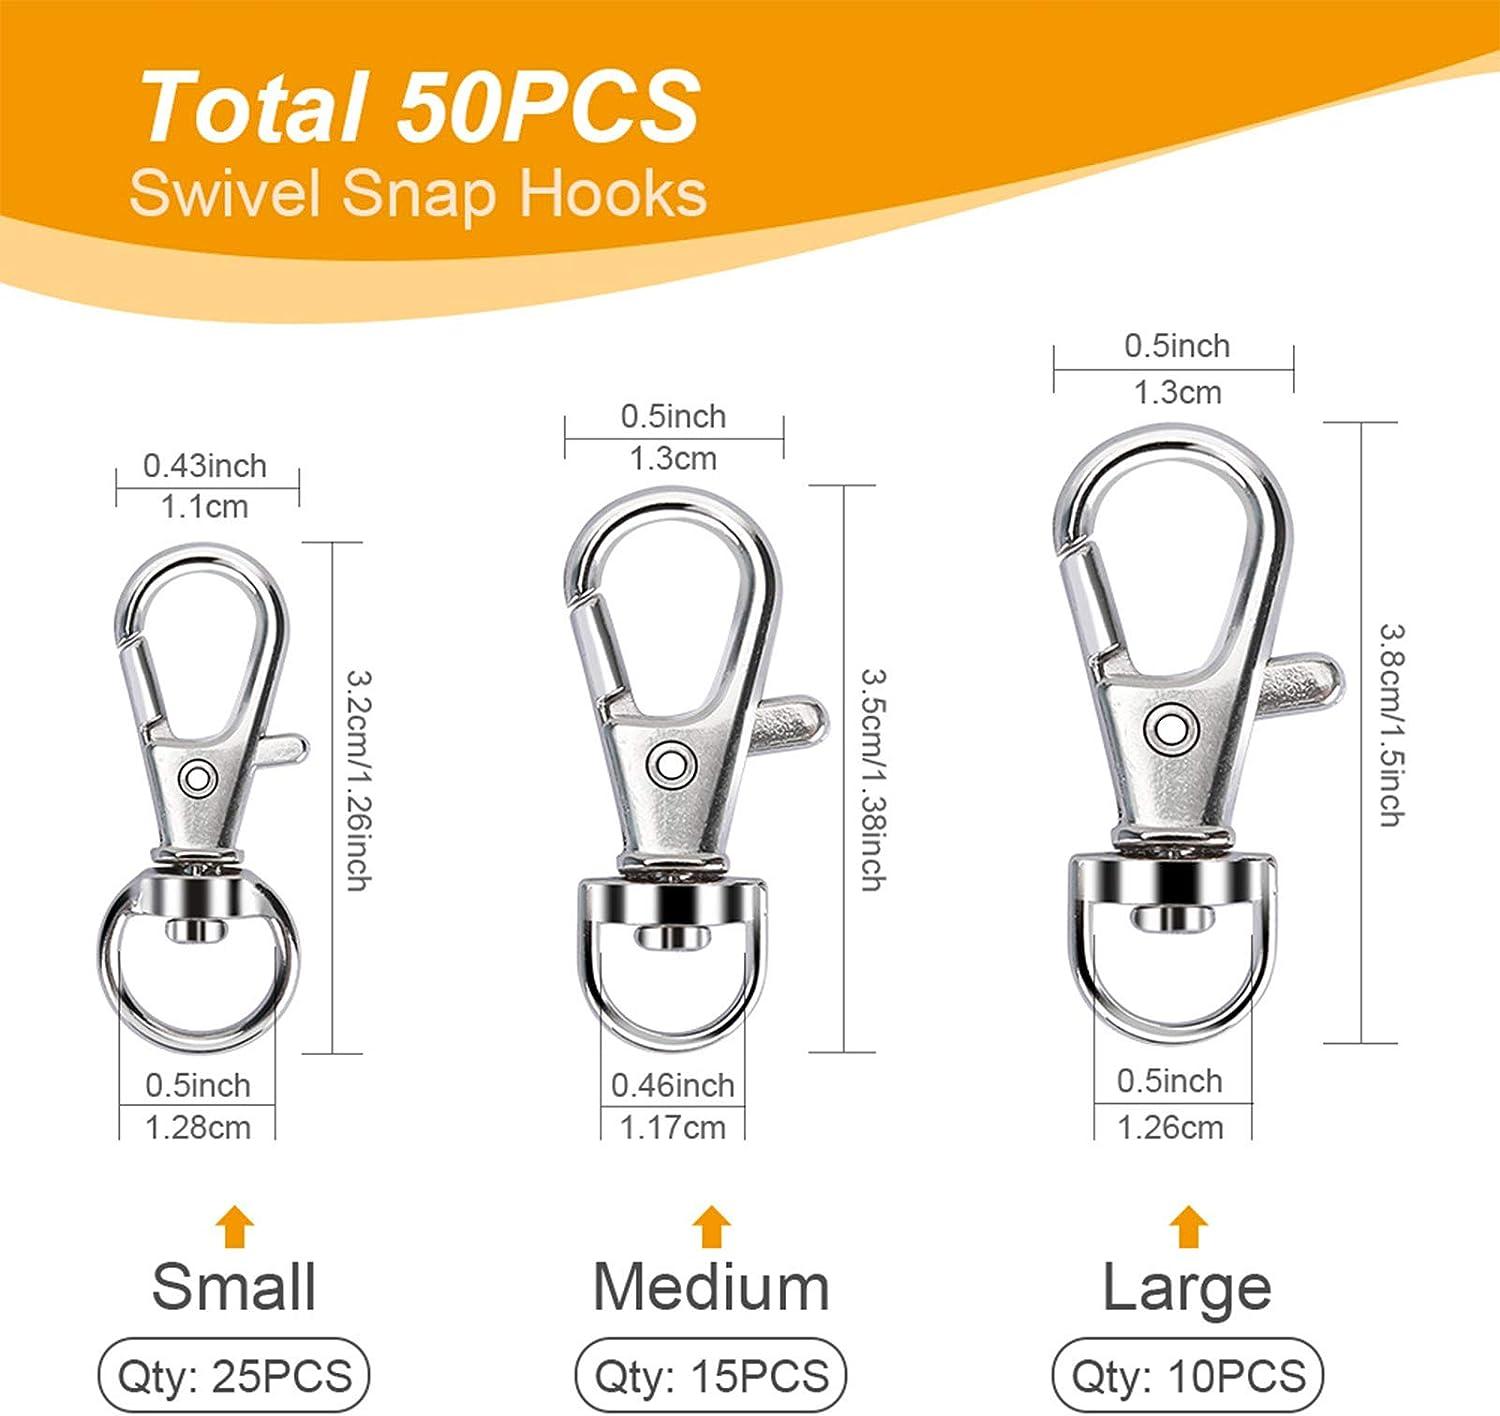 100PCS Swivel Snap Hooks with Key Rings, Premium Metal Swivel